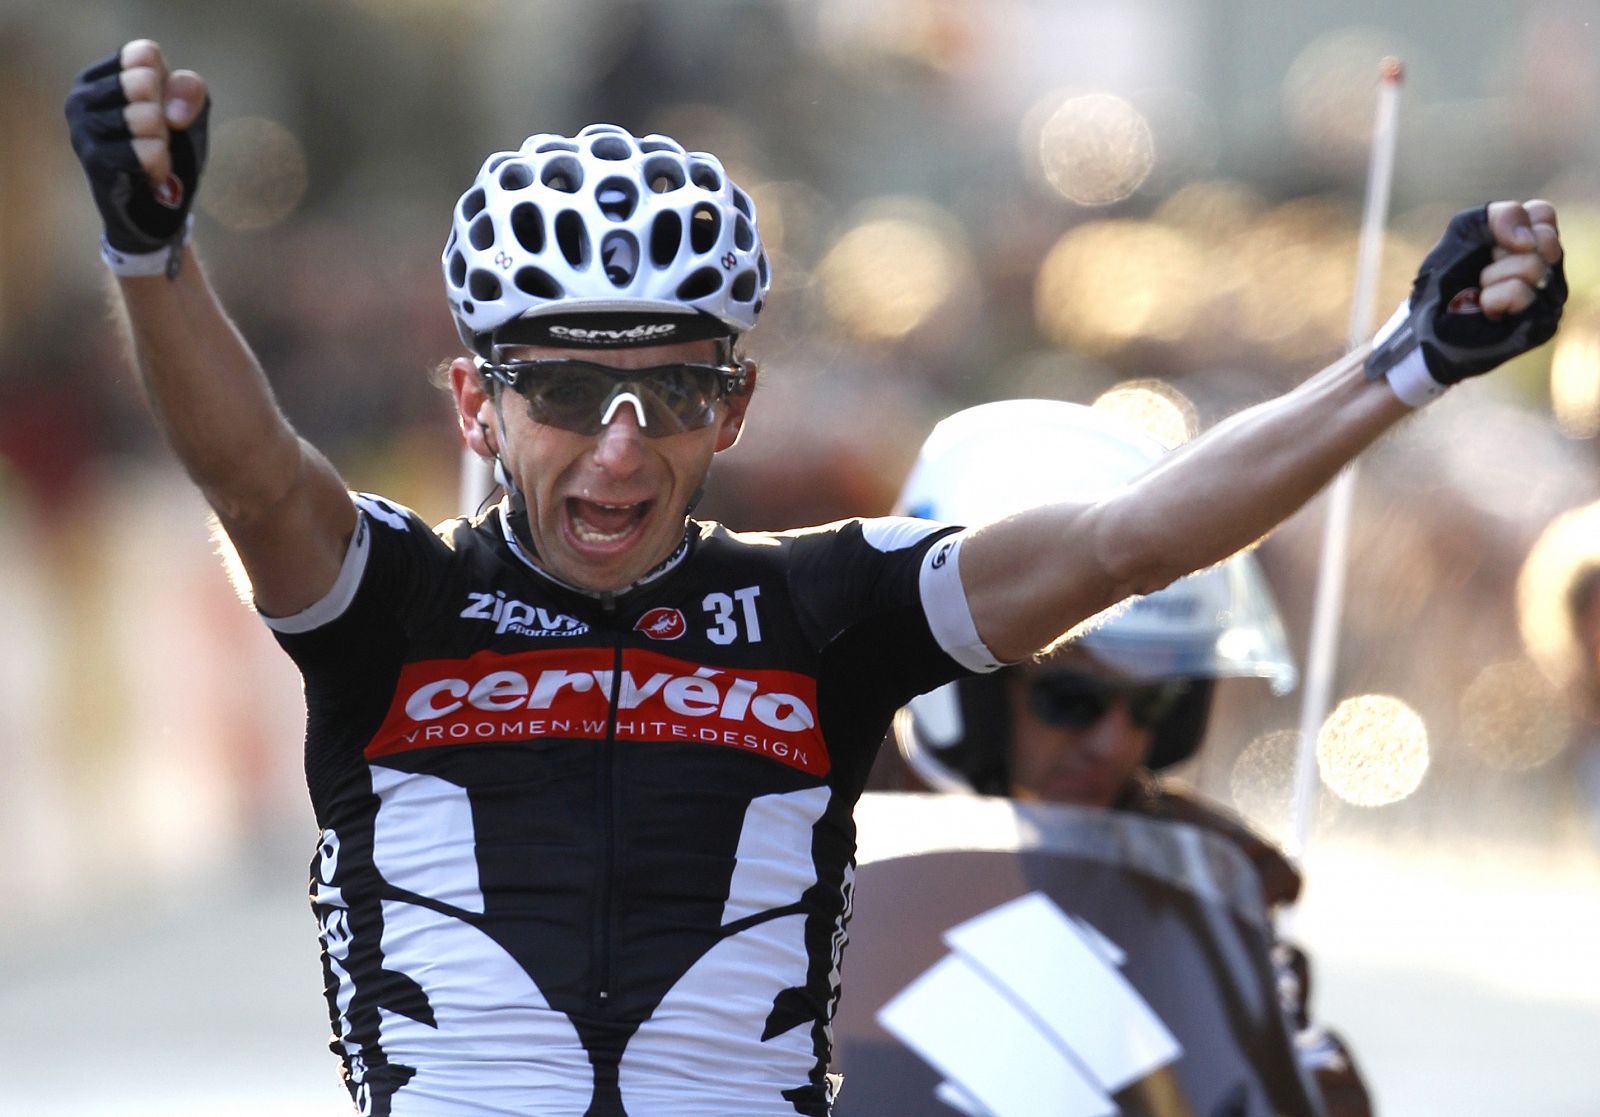 Cervelo team rider Tondo celebrates winning the sixth stage of the Paris-Nice cycling race